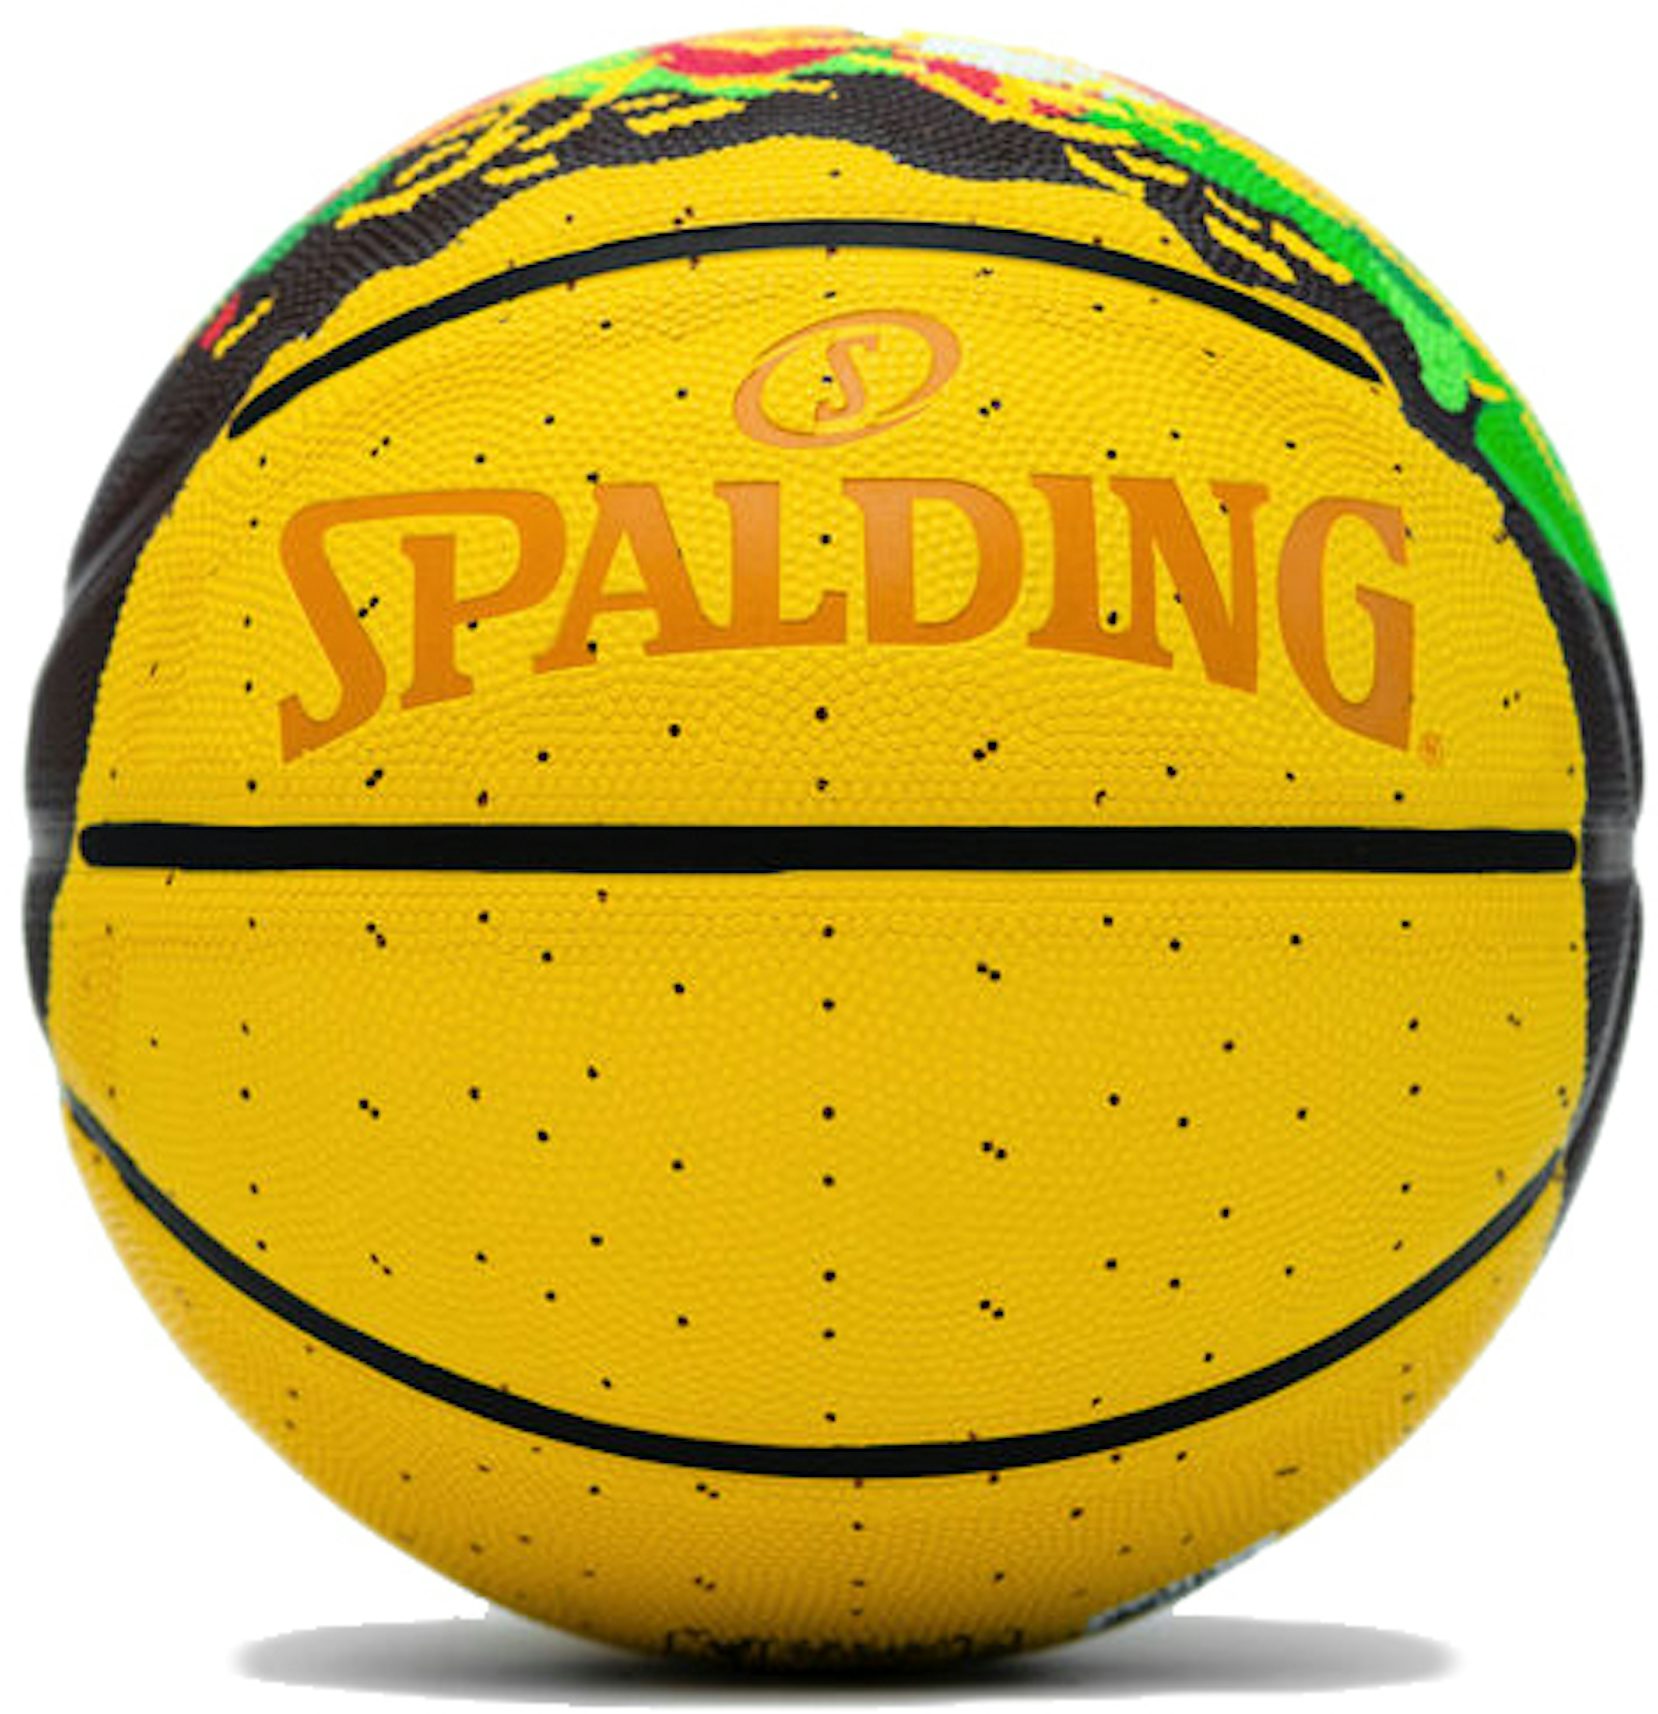 Spalding NBA Lebron James Basketball - Yellow